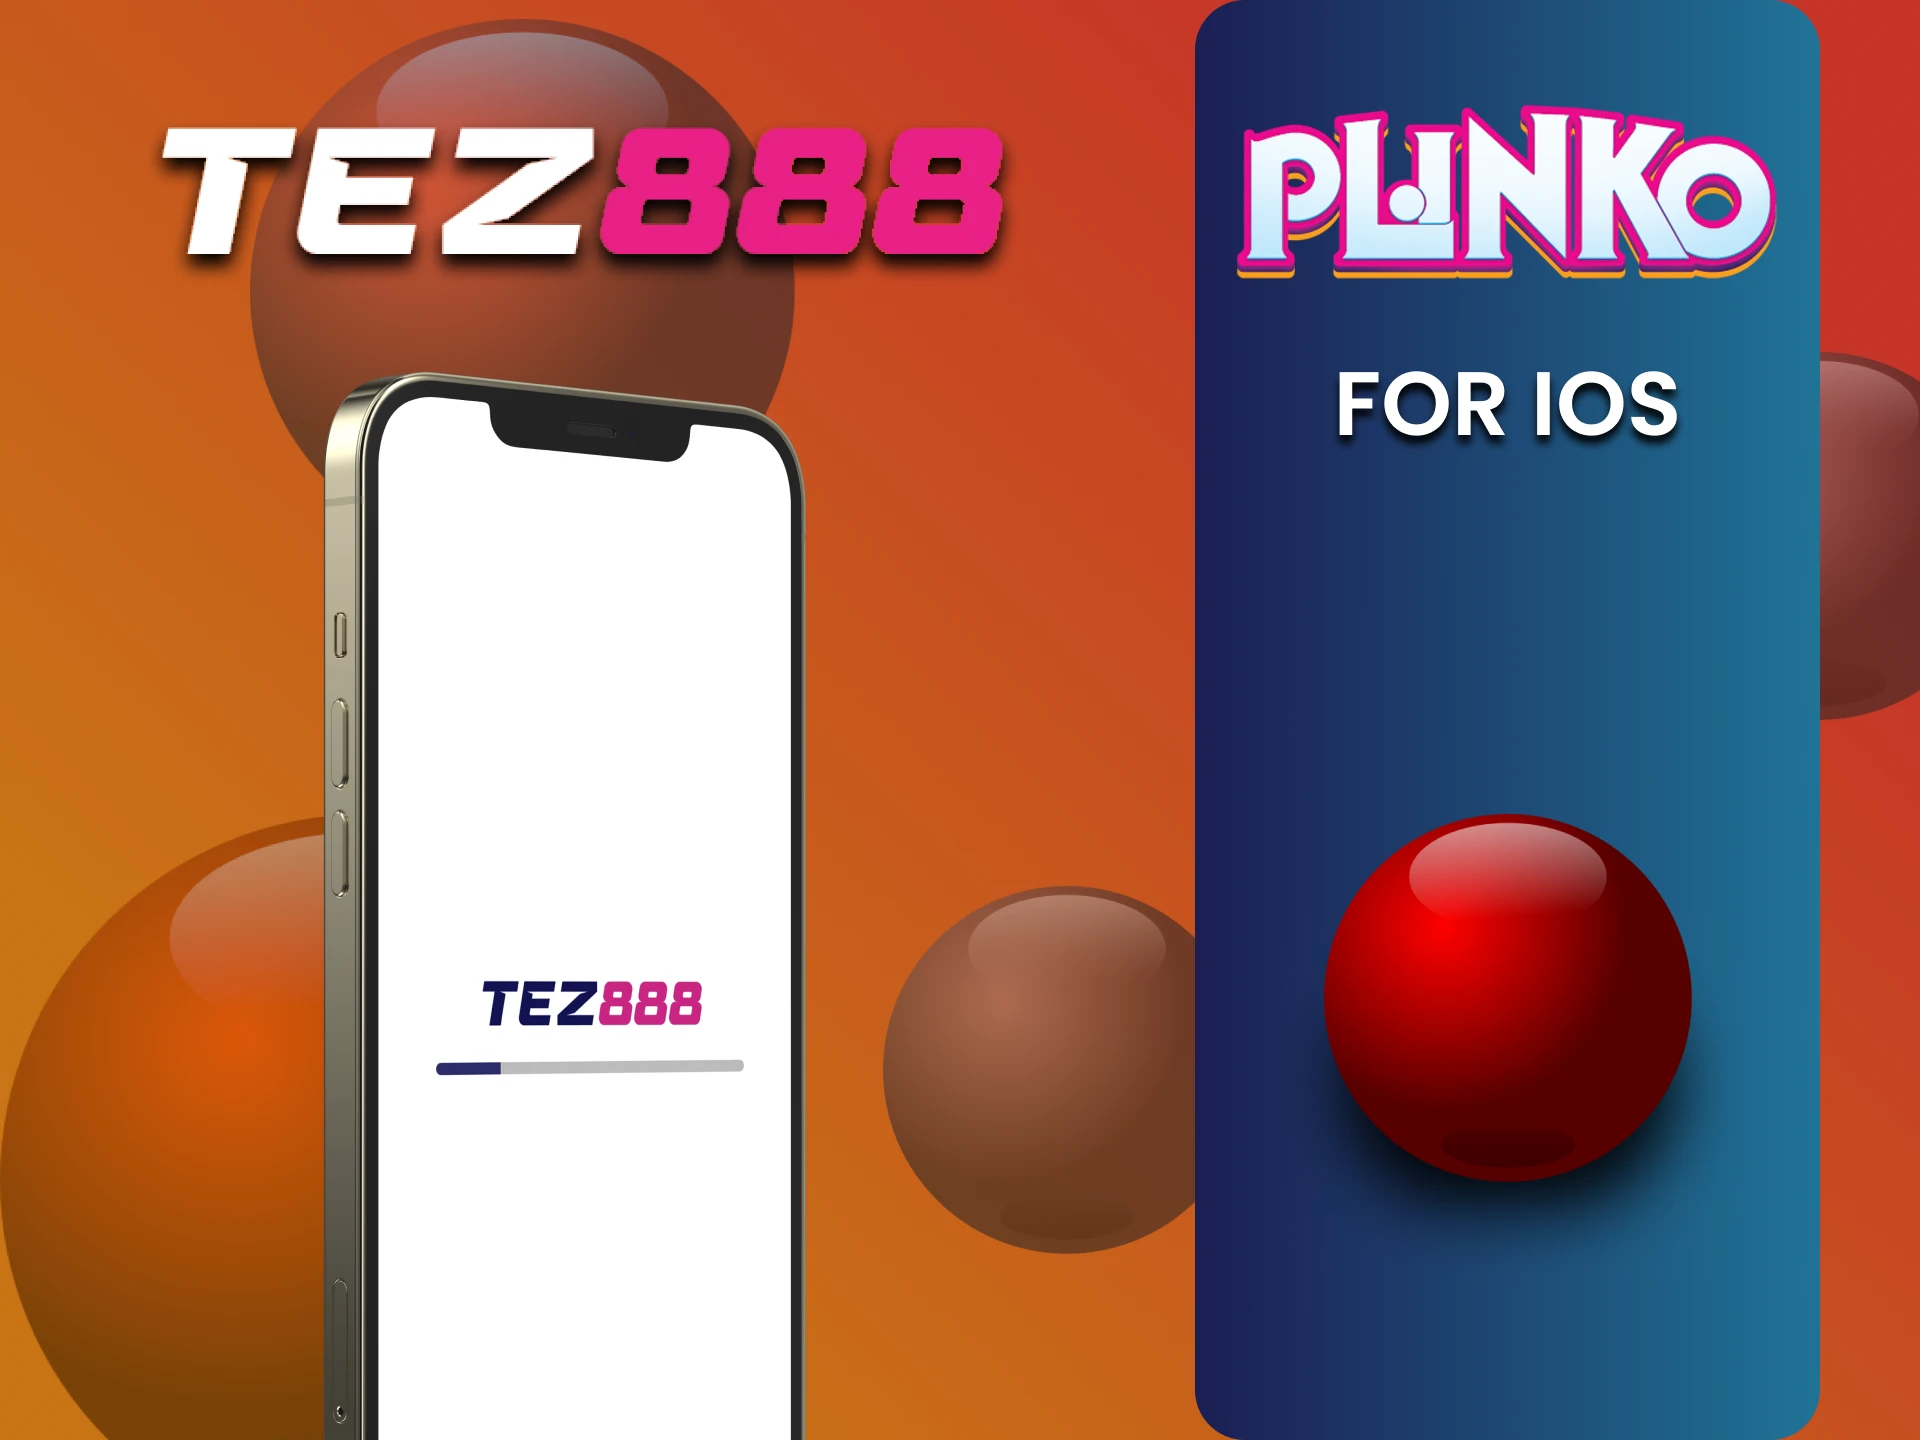 Download the Tez888 app to play Plinko on iOS.